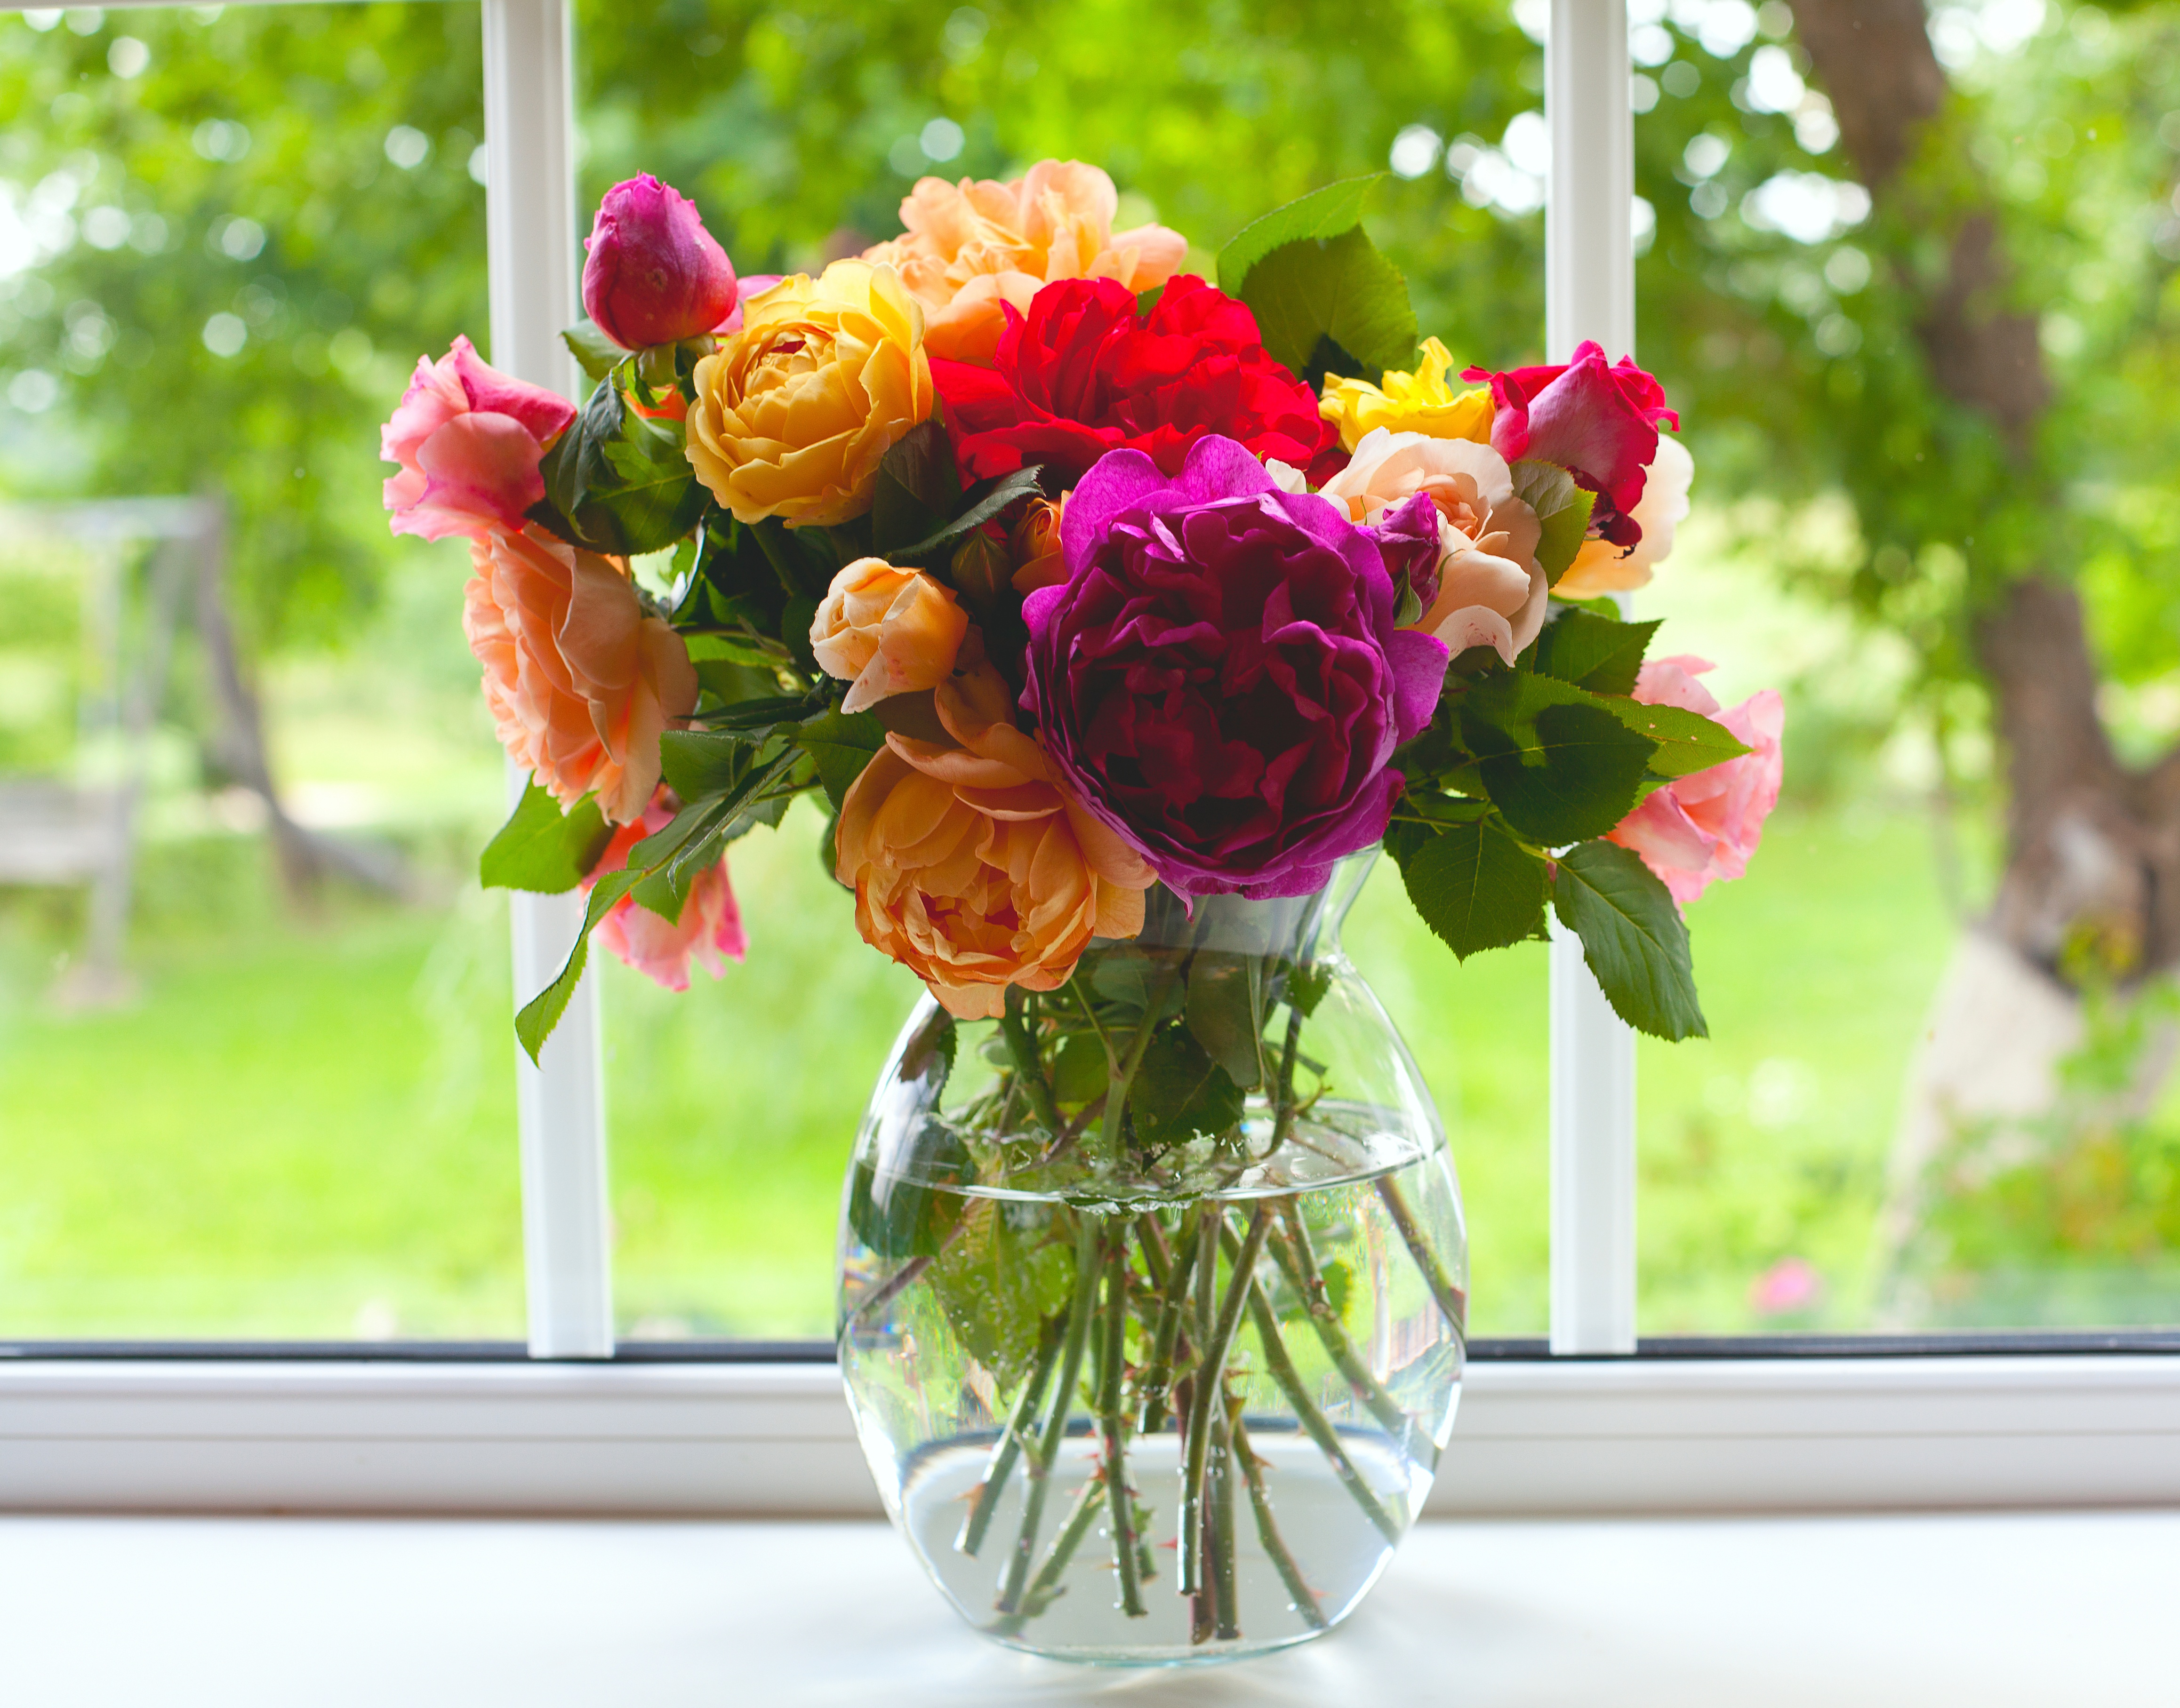 Условия для роз в вазе. Цветы в вазе. Цветц в впзн. Шикарные цветы в вазе. Цветочки в вазе.